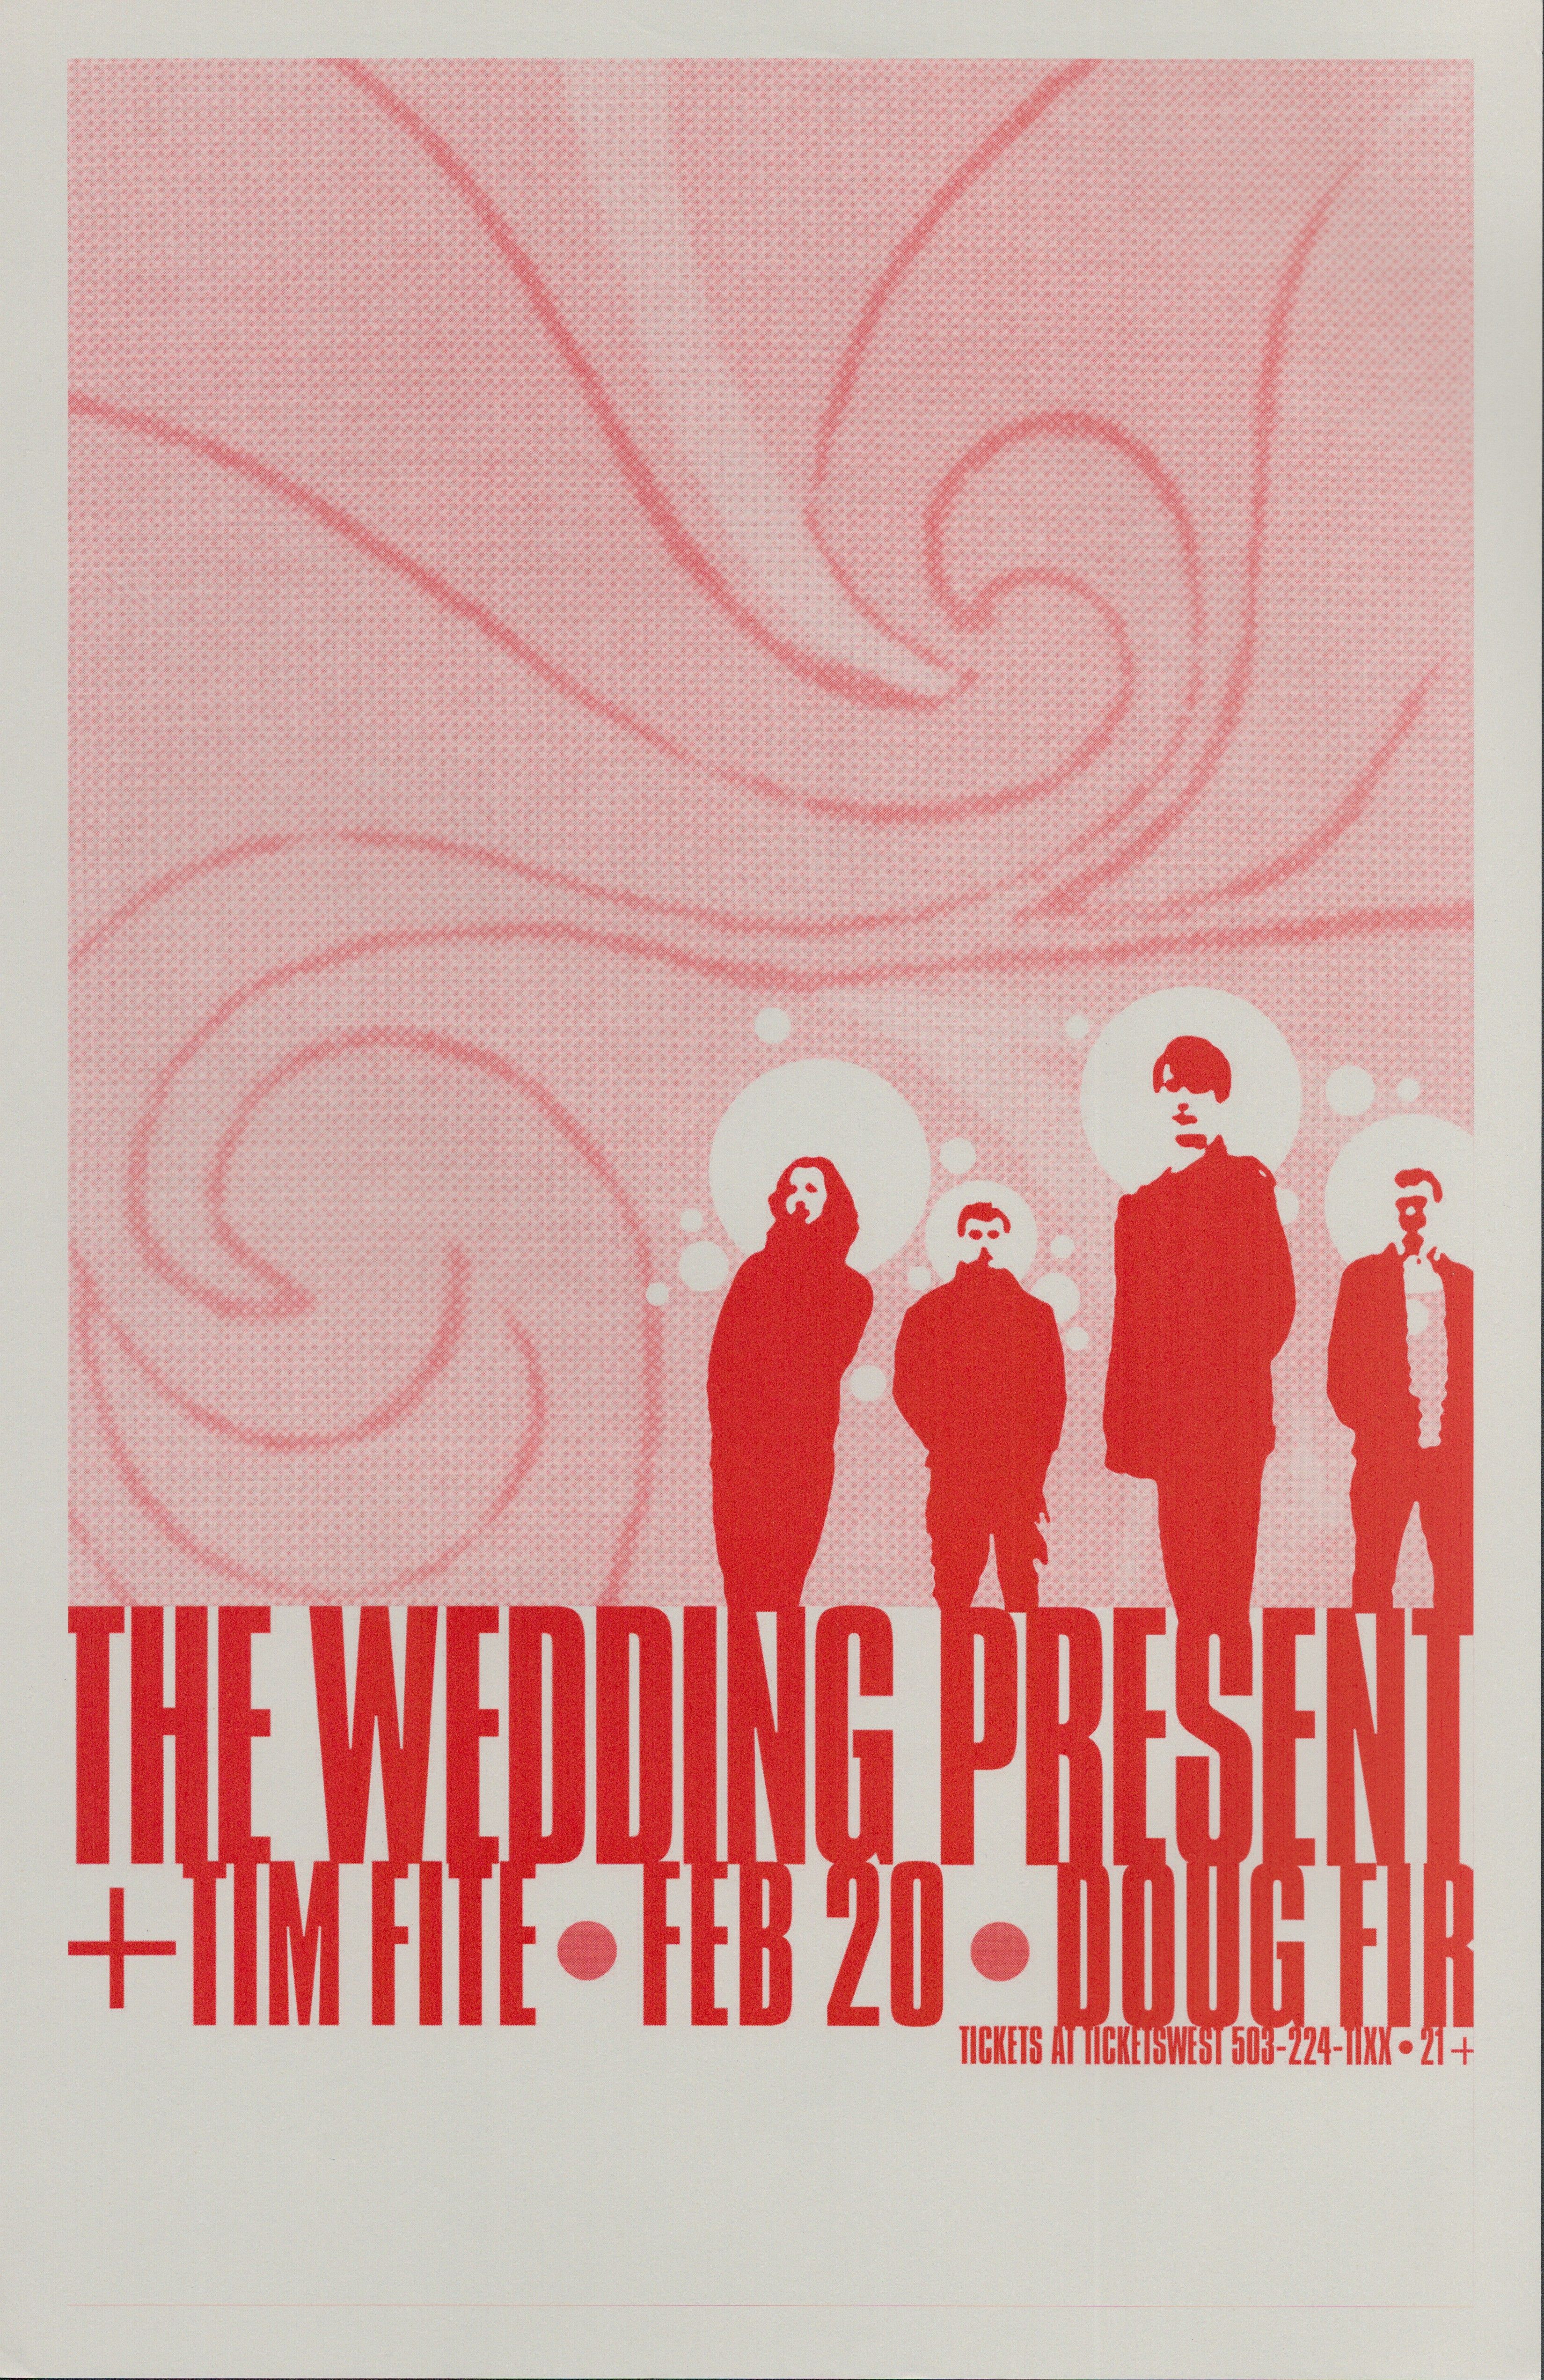 MXP-141.38 Wedding Present Doug Fir 2006 Concert Poster